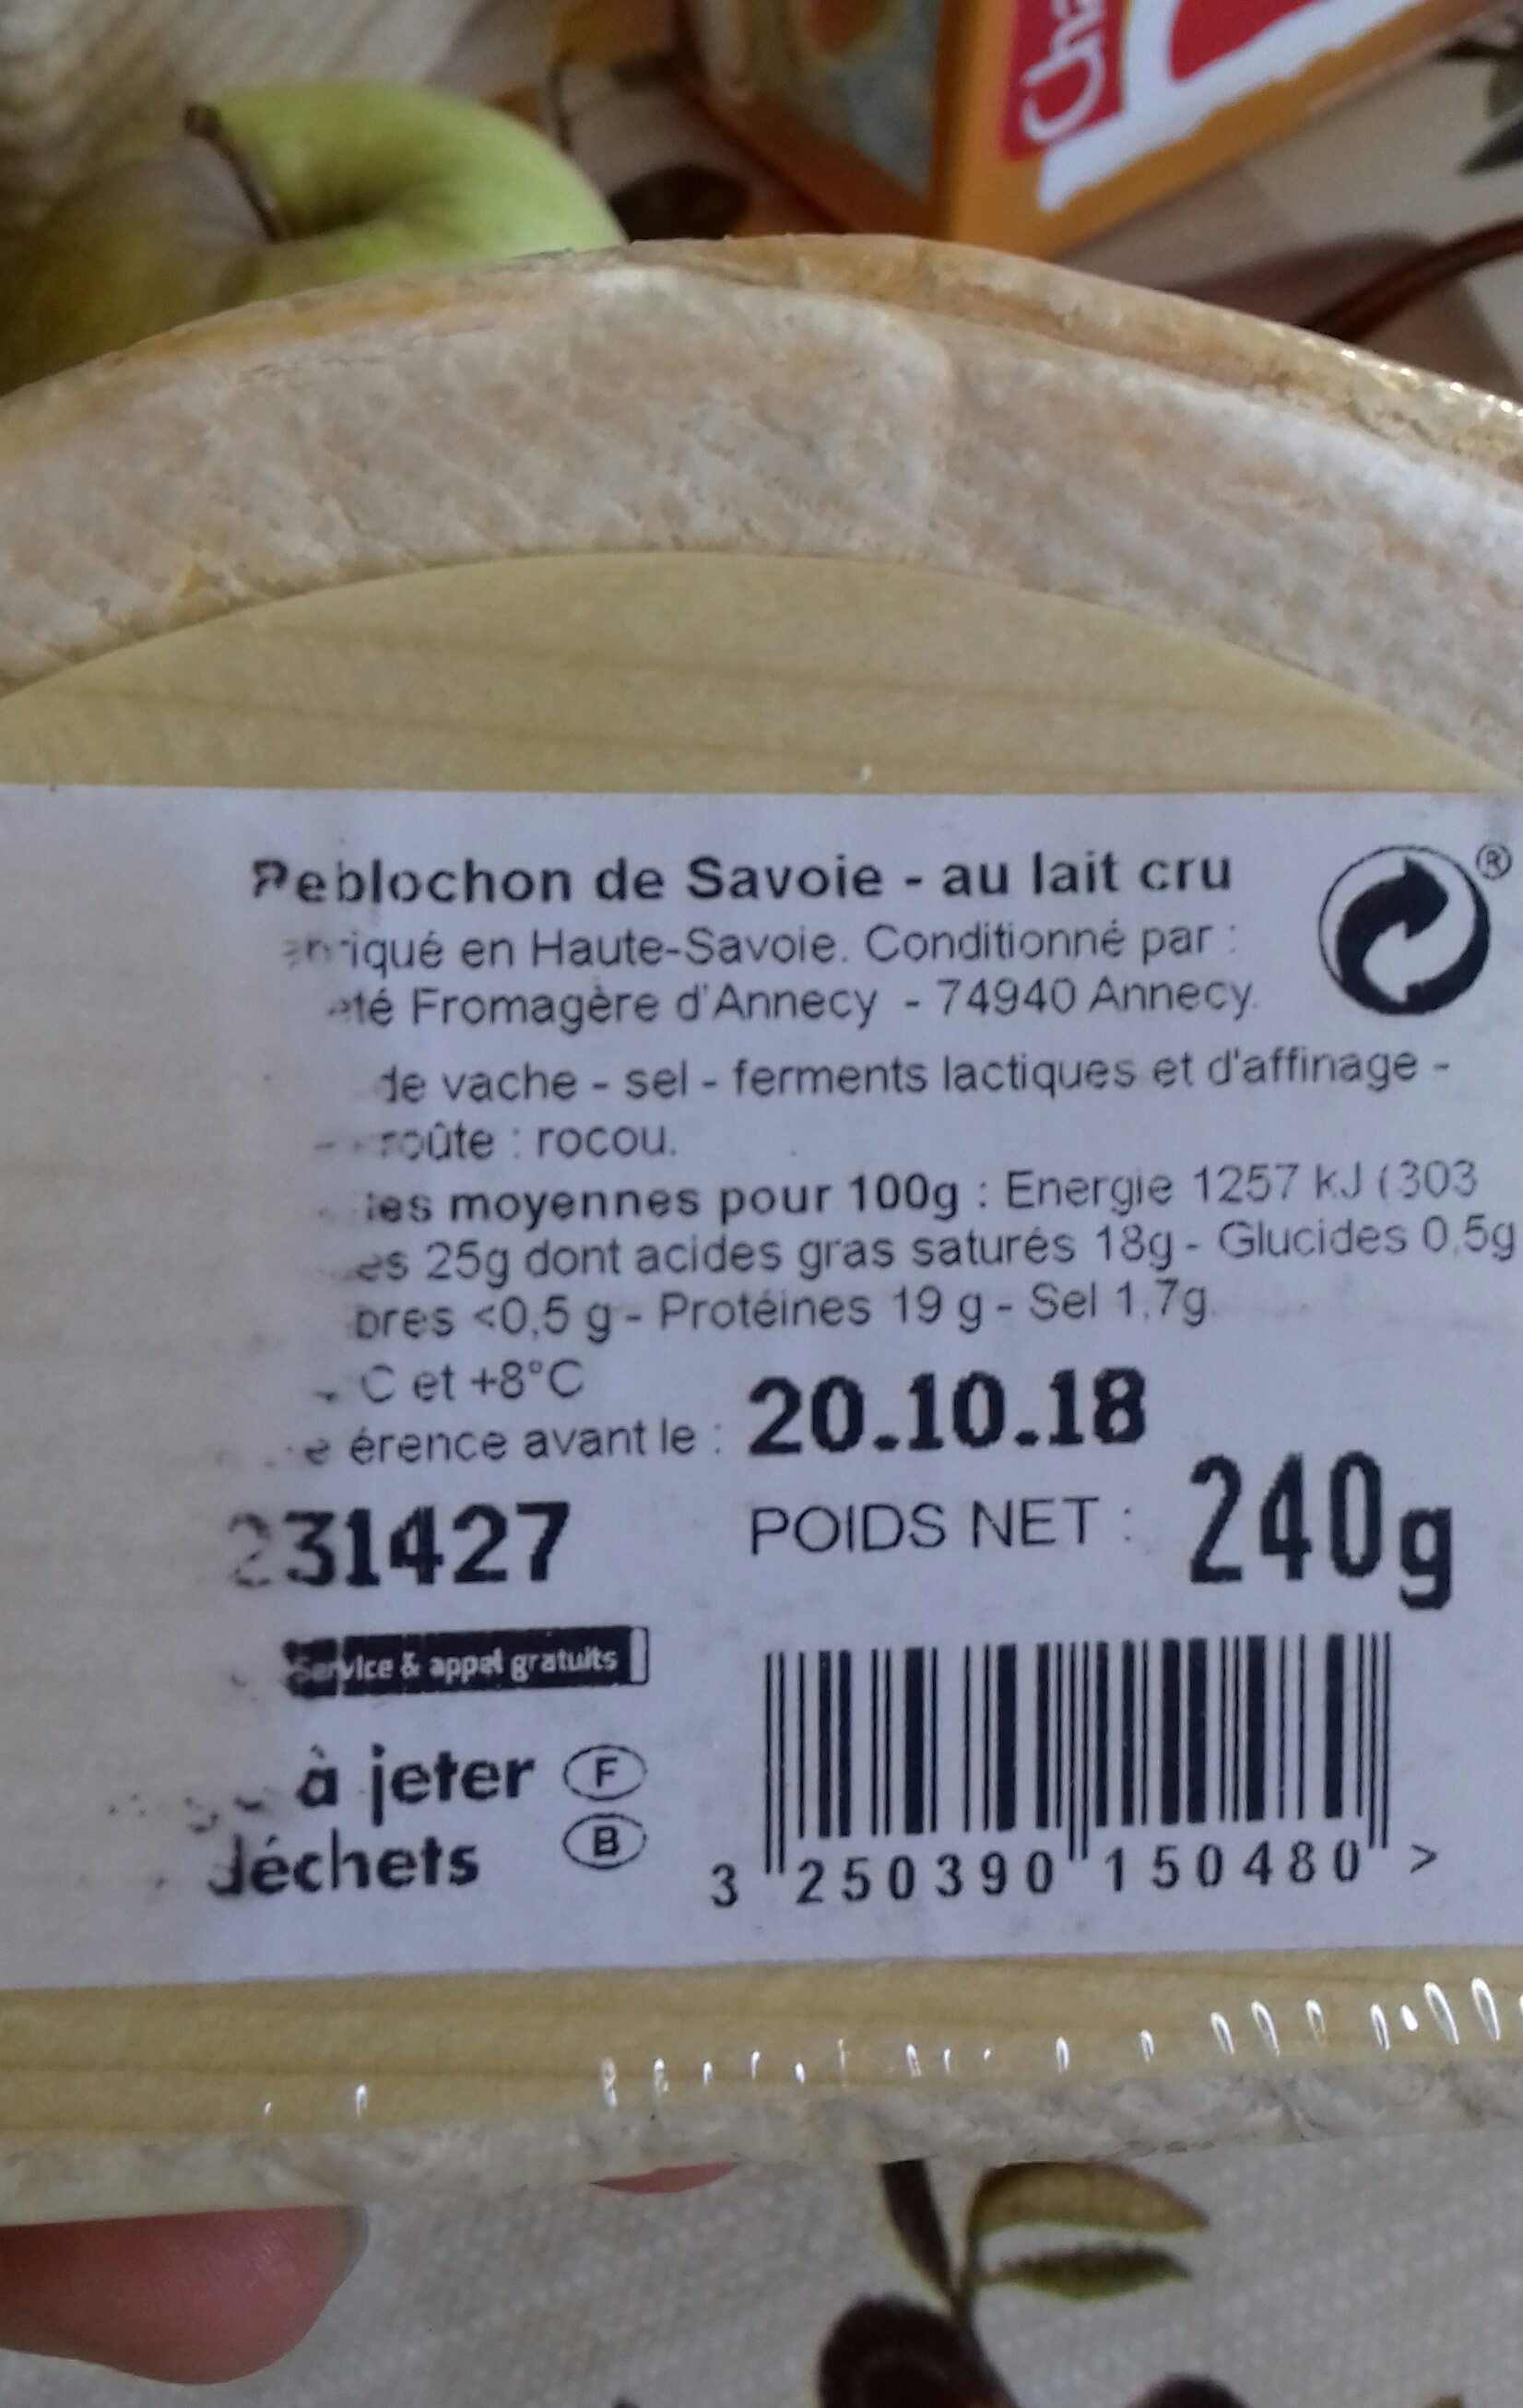 Petit reblochon de Savoie au lait cru - Ingrediënten - fr